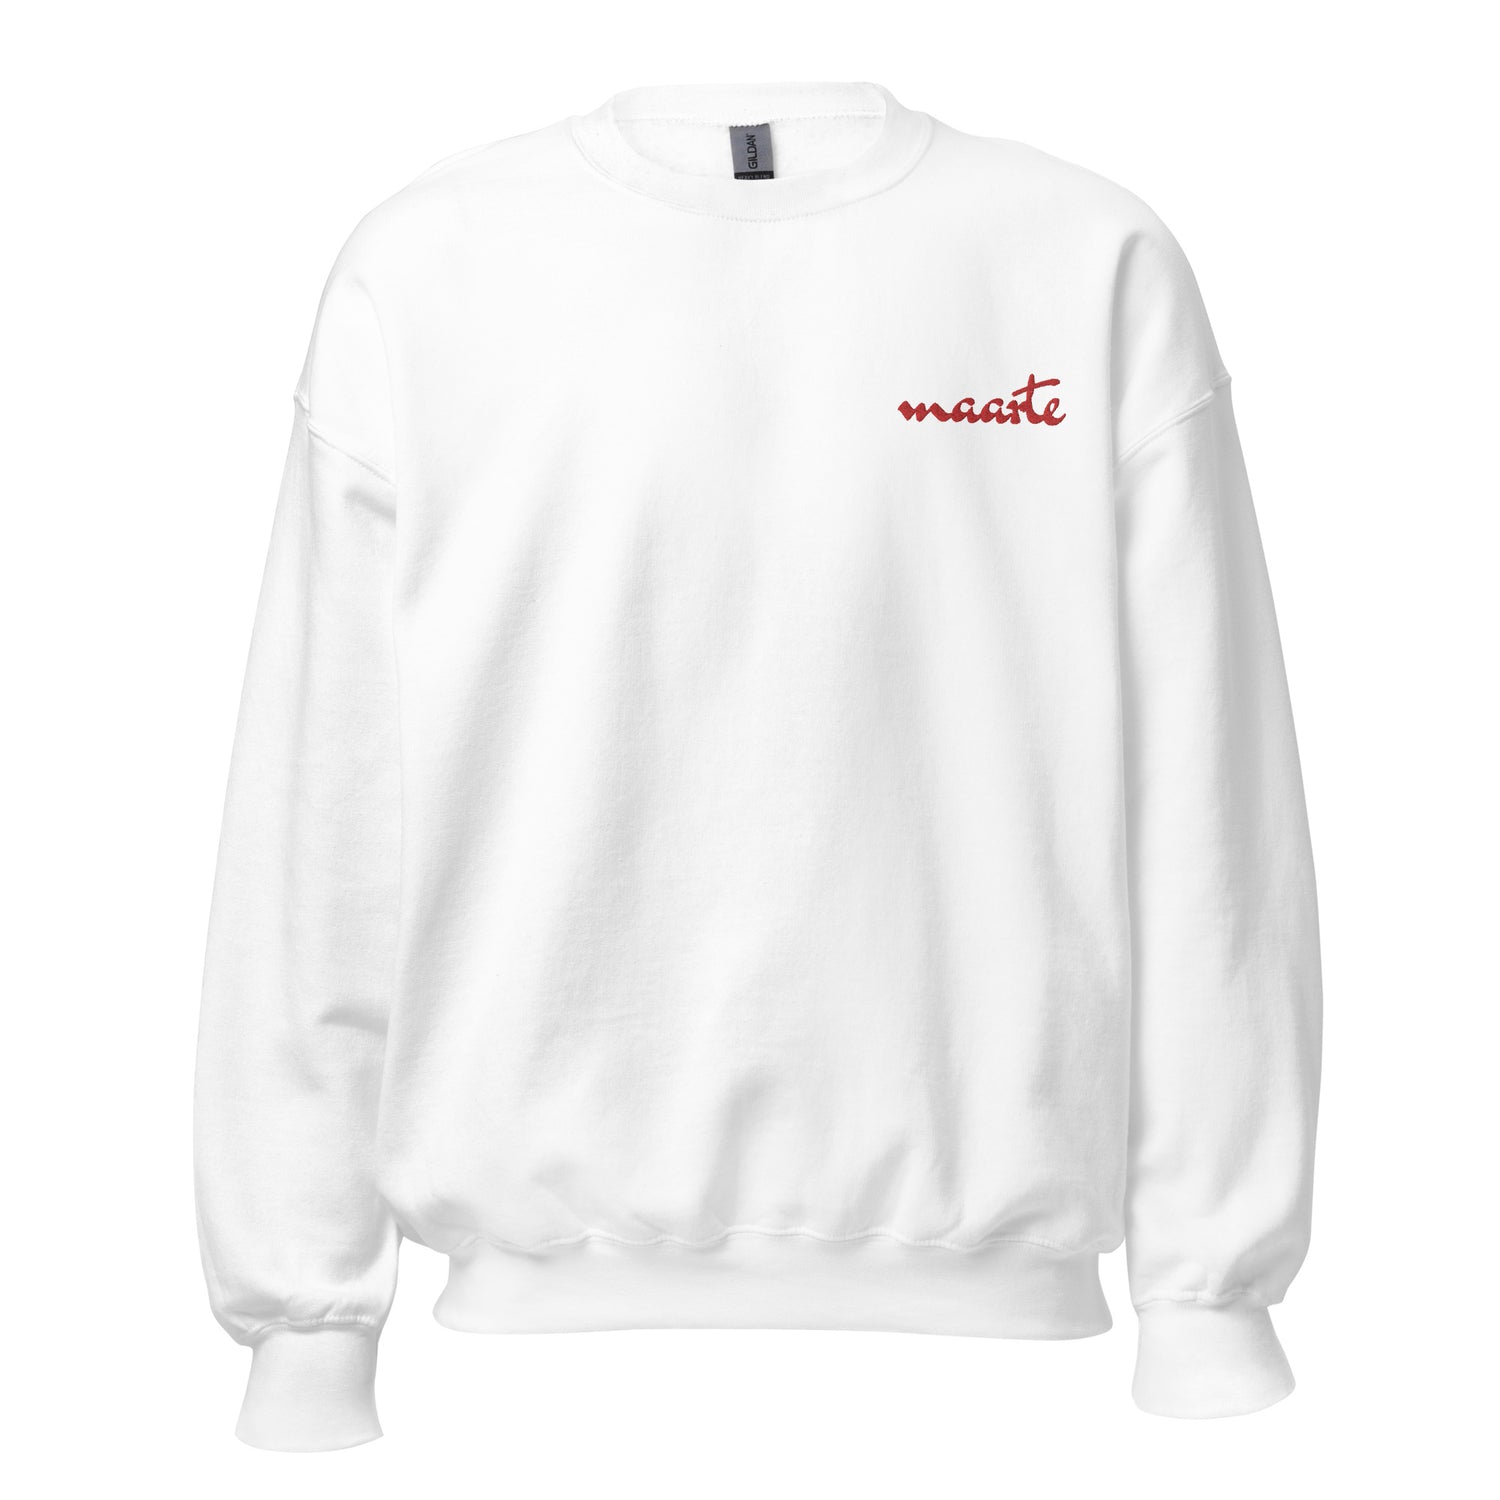 Filipino Sweatshirt Crew Neck Maarte Embroidered Statement Merch color variant White